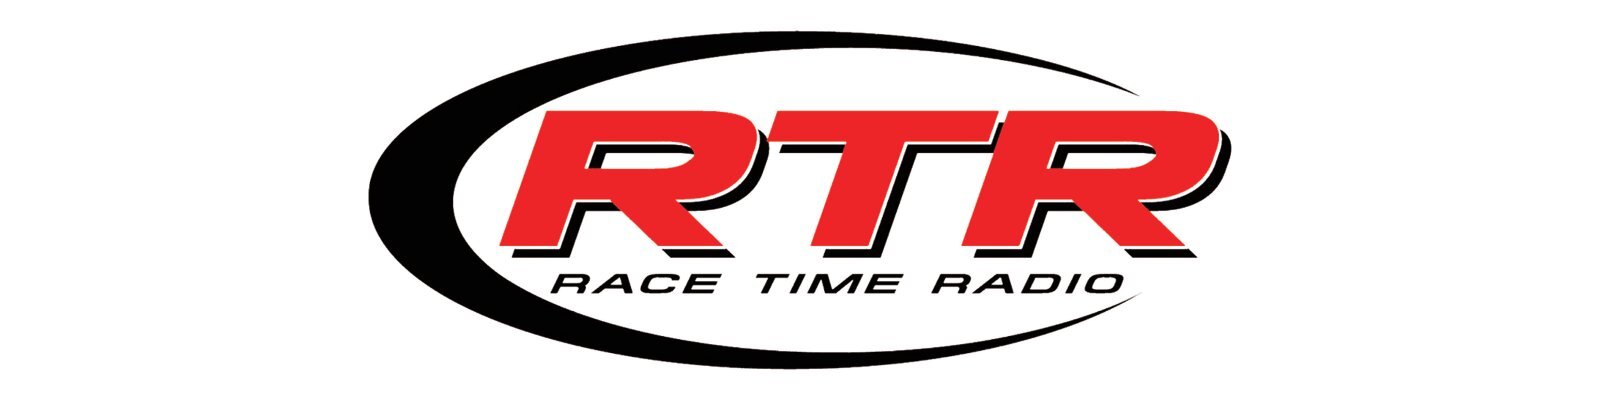 Race Time Radio